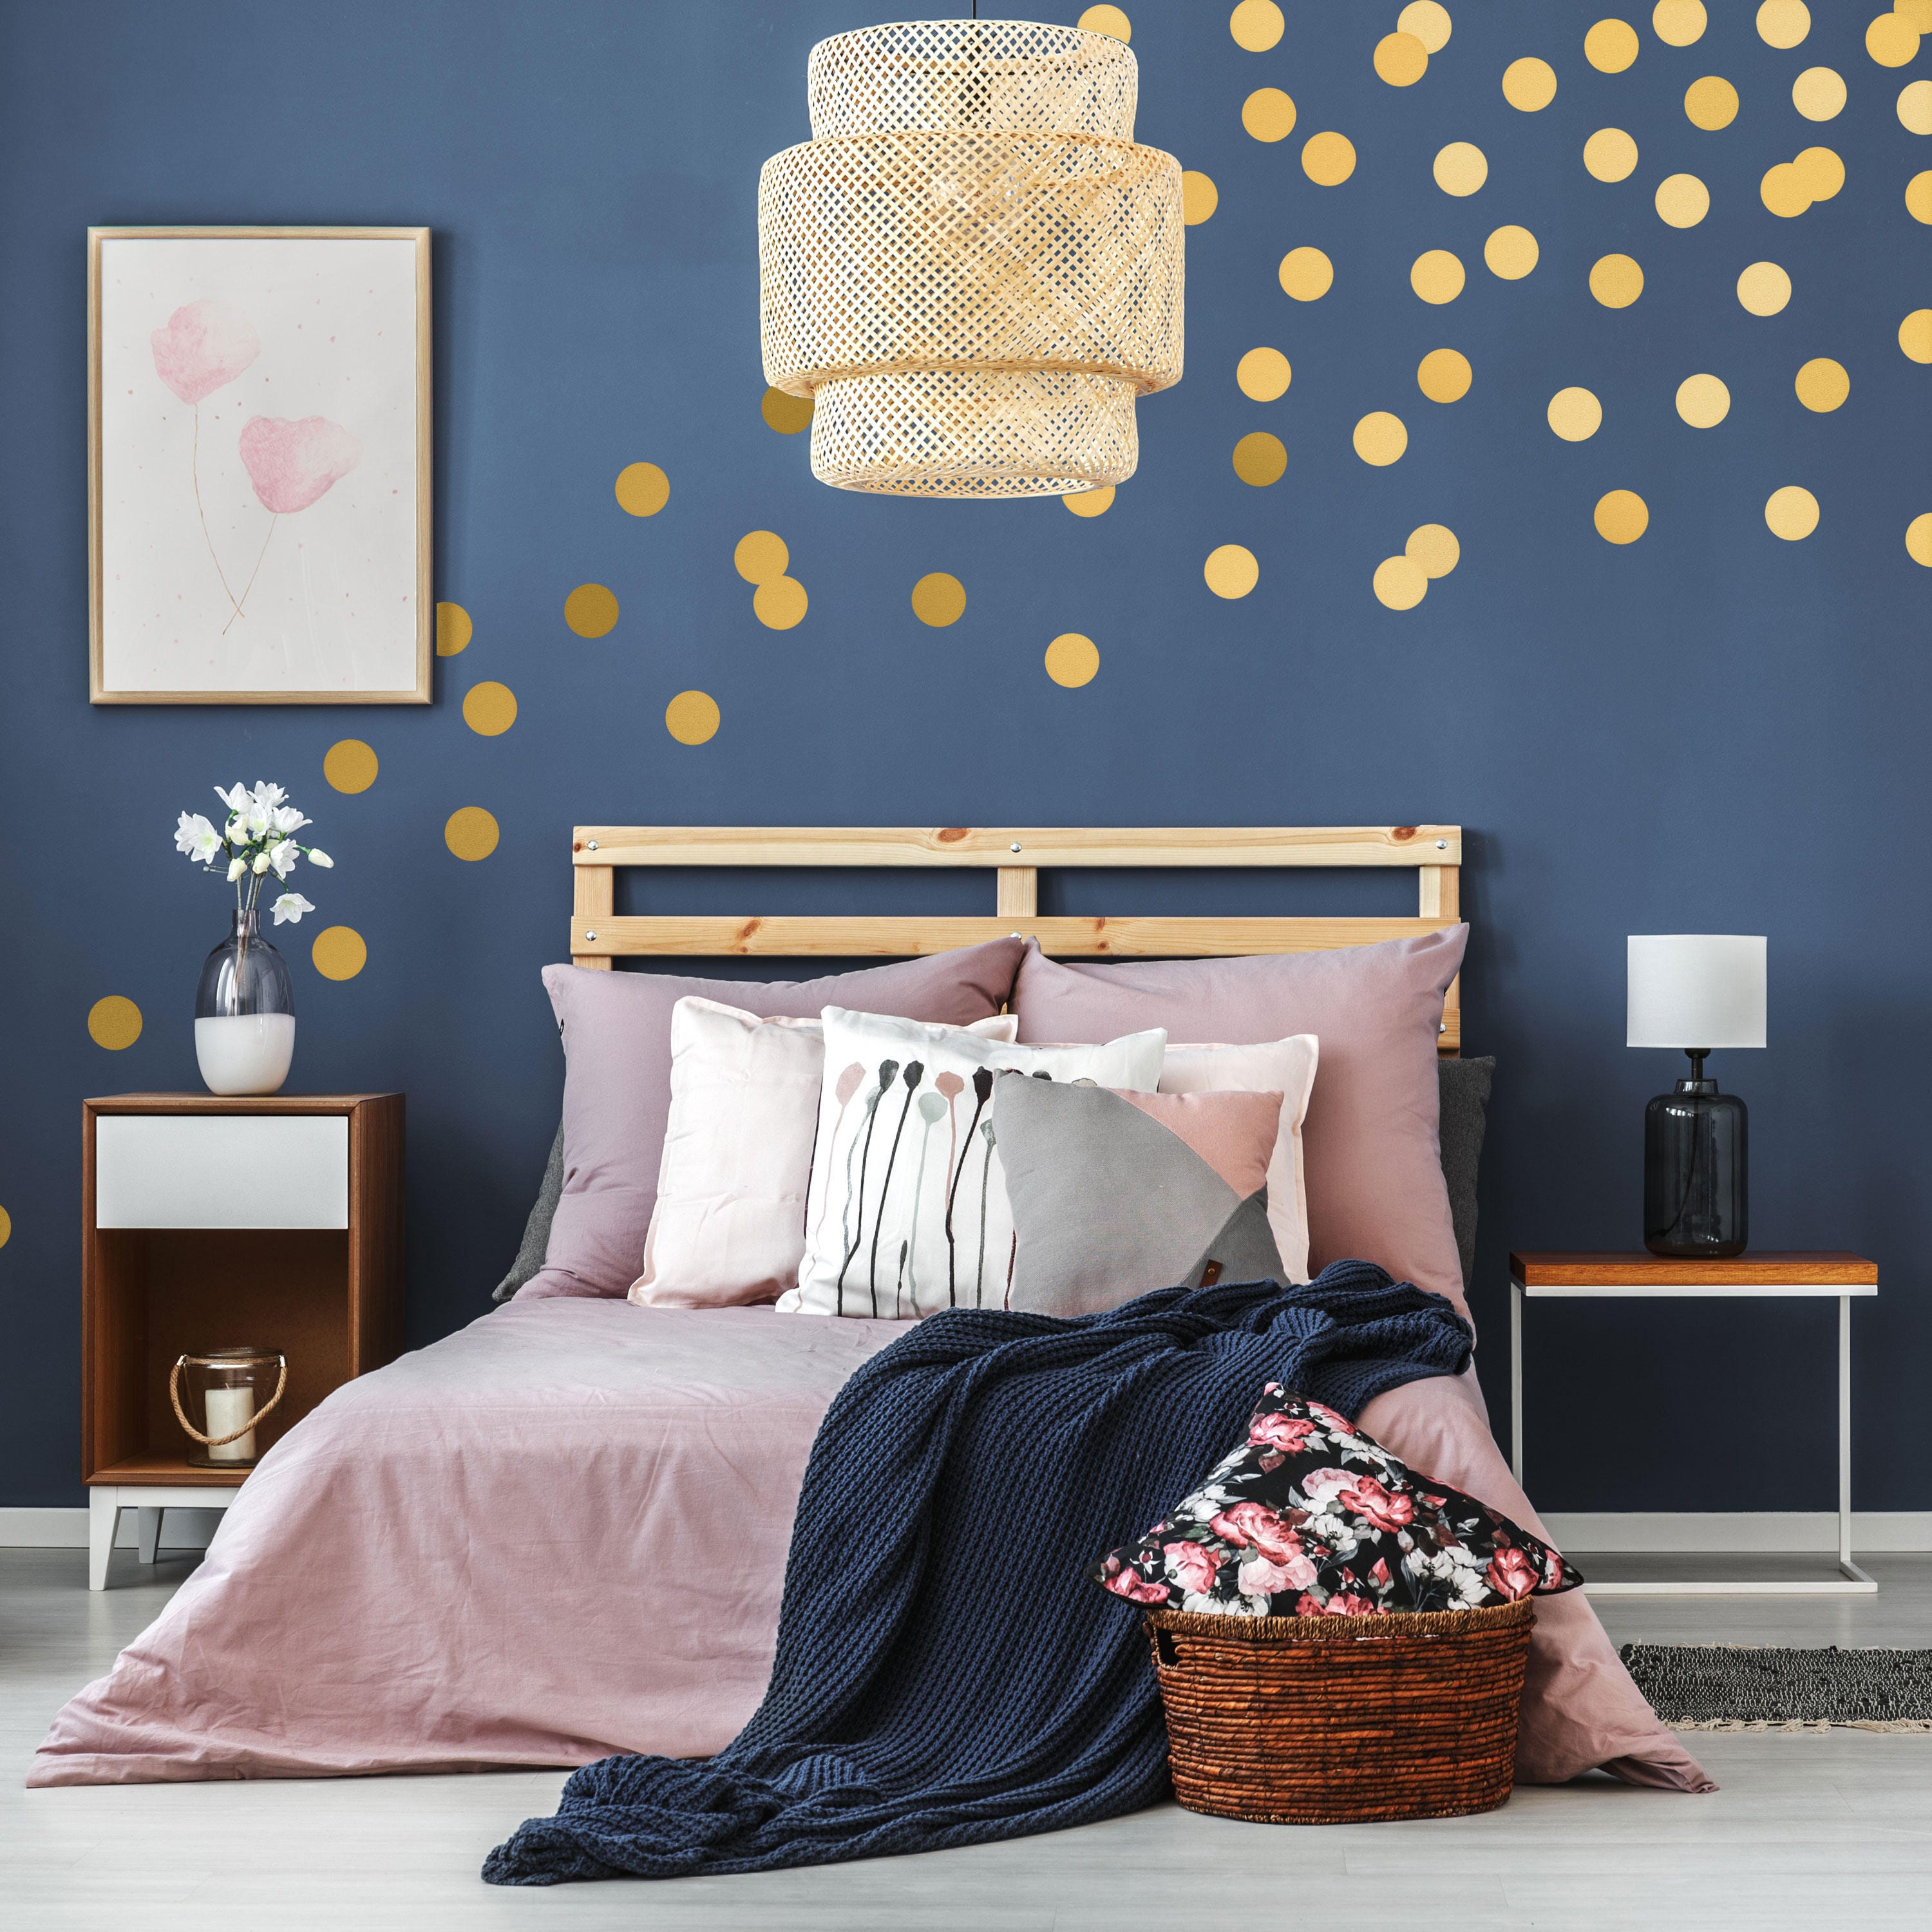 Confetti Decals Set of 120 Metallic Gold Wall Decals Polka Dots Wall Decor 